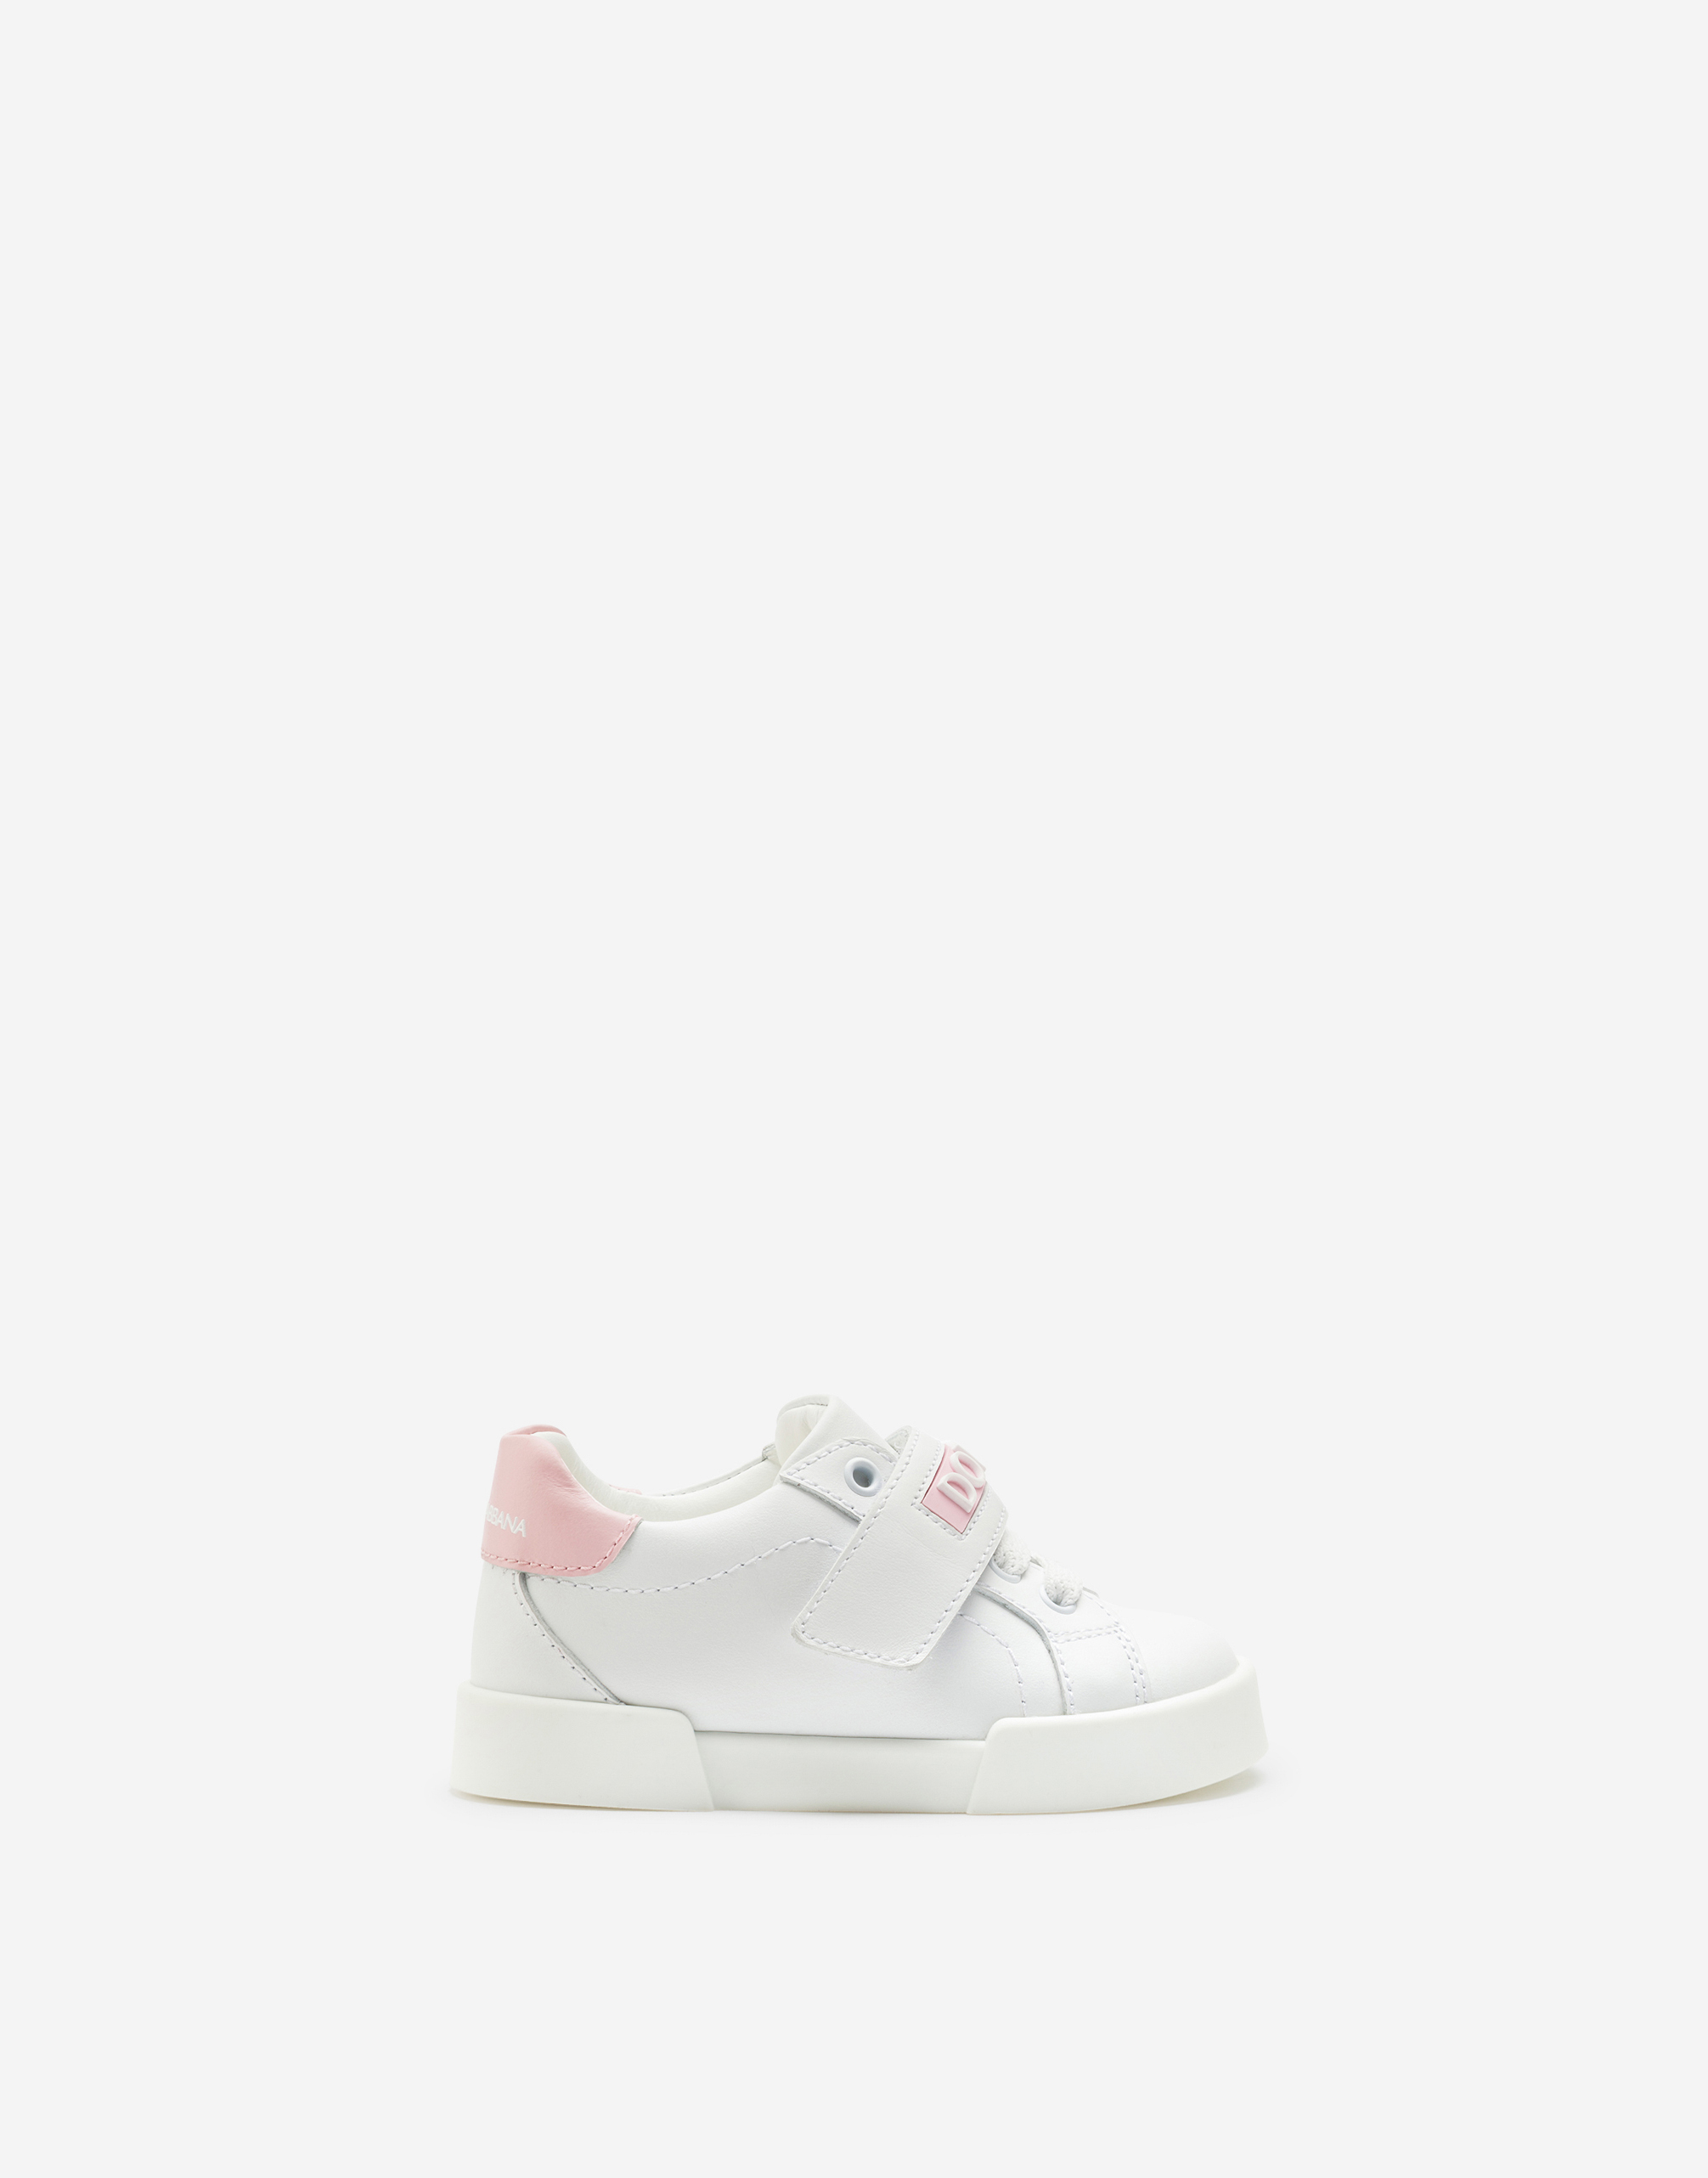 Portofino light sneakers with rubberized logo in White/Pink